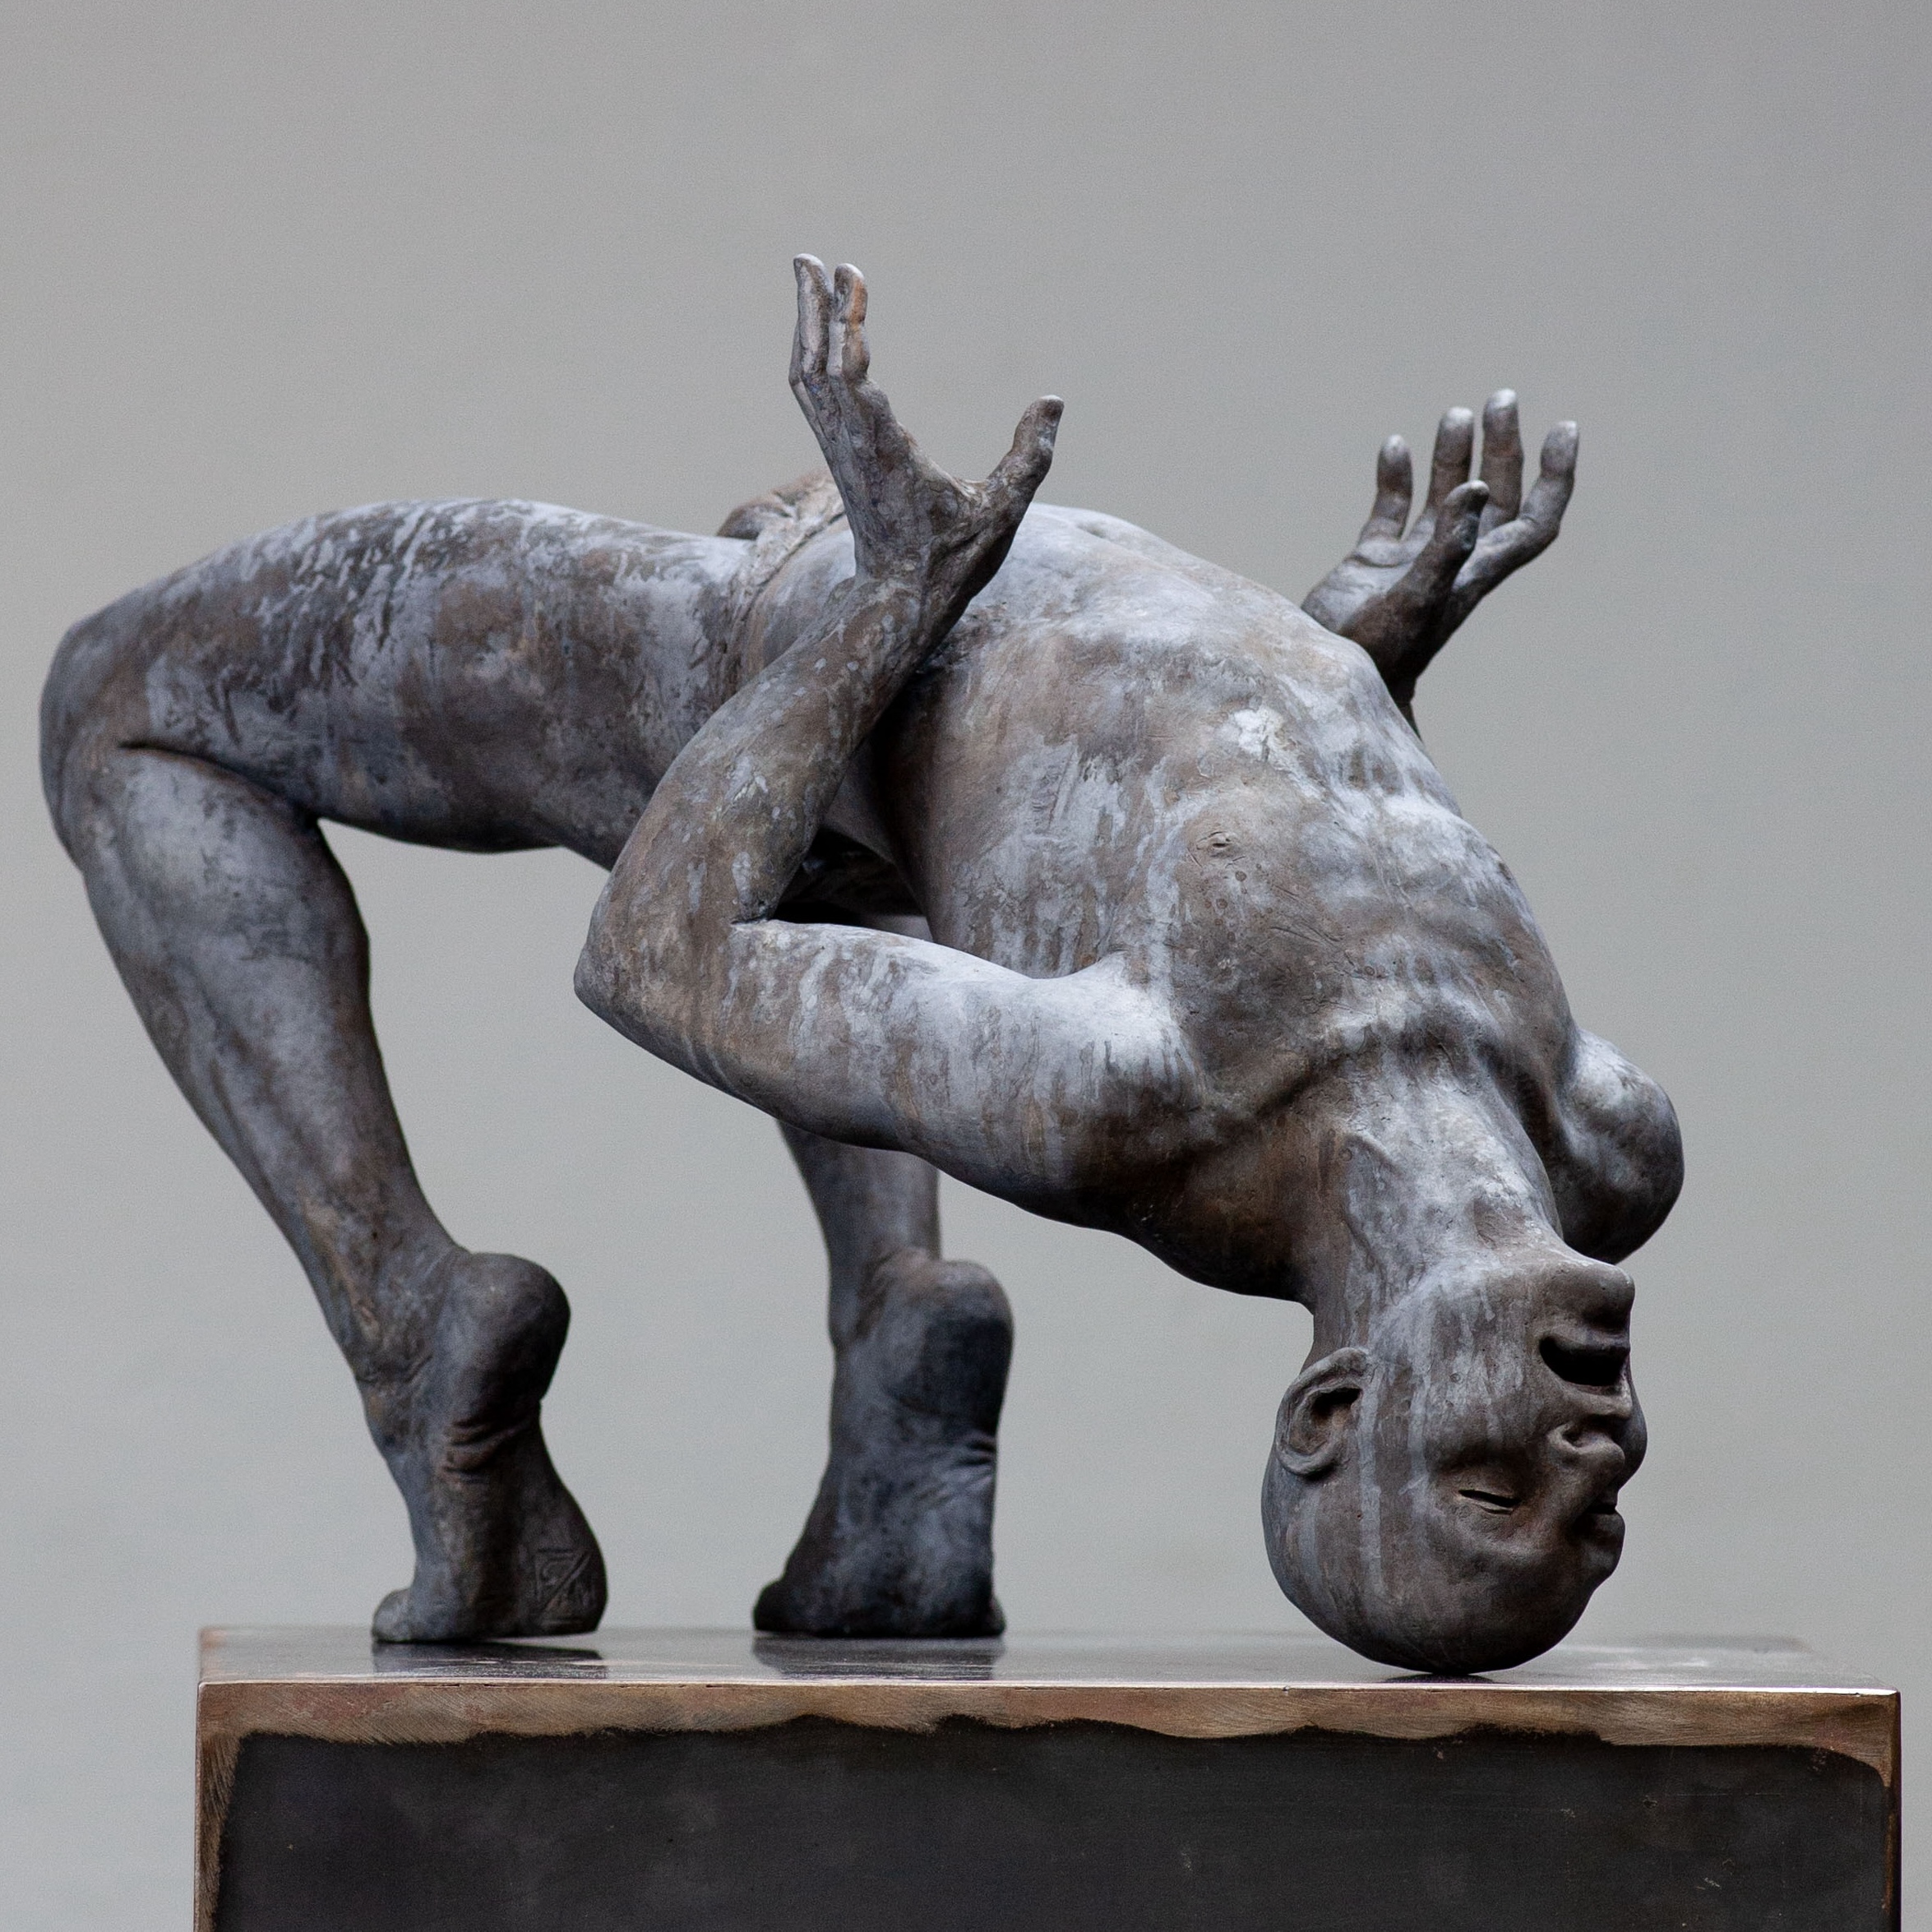 Coderch & Malavia Artiste Sculpture Bronze Giant of salt@ Marciano Contemporary